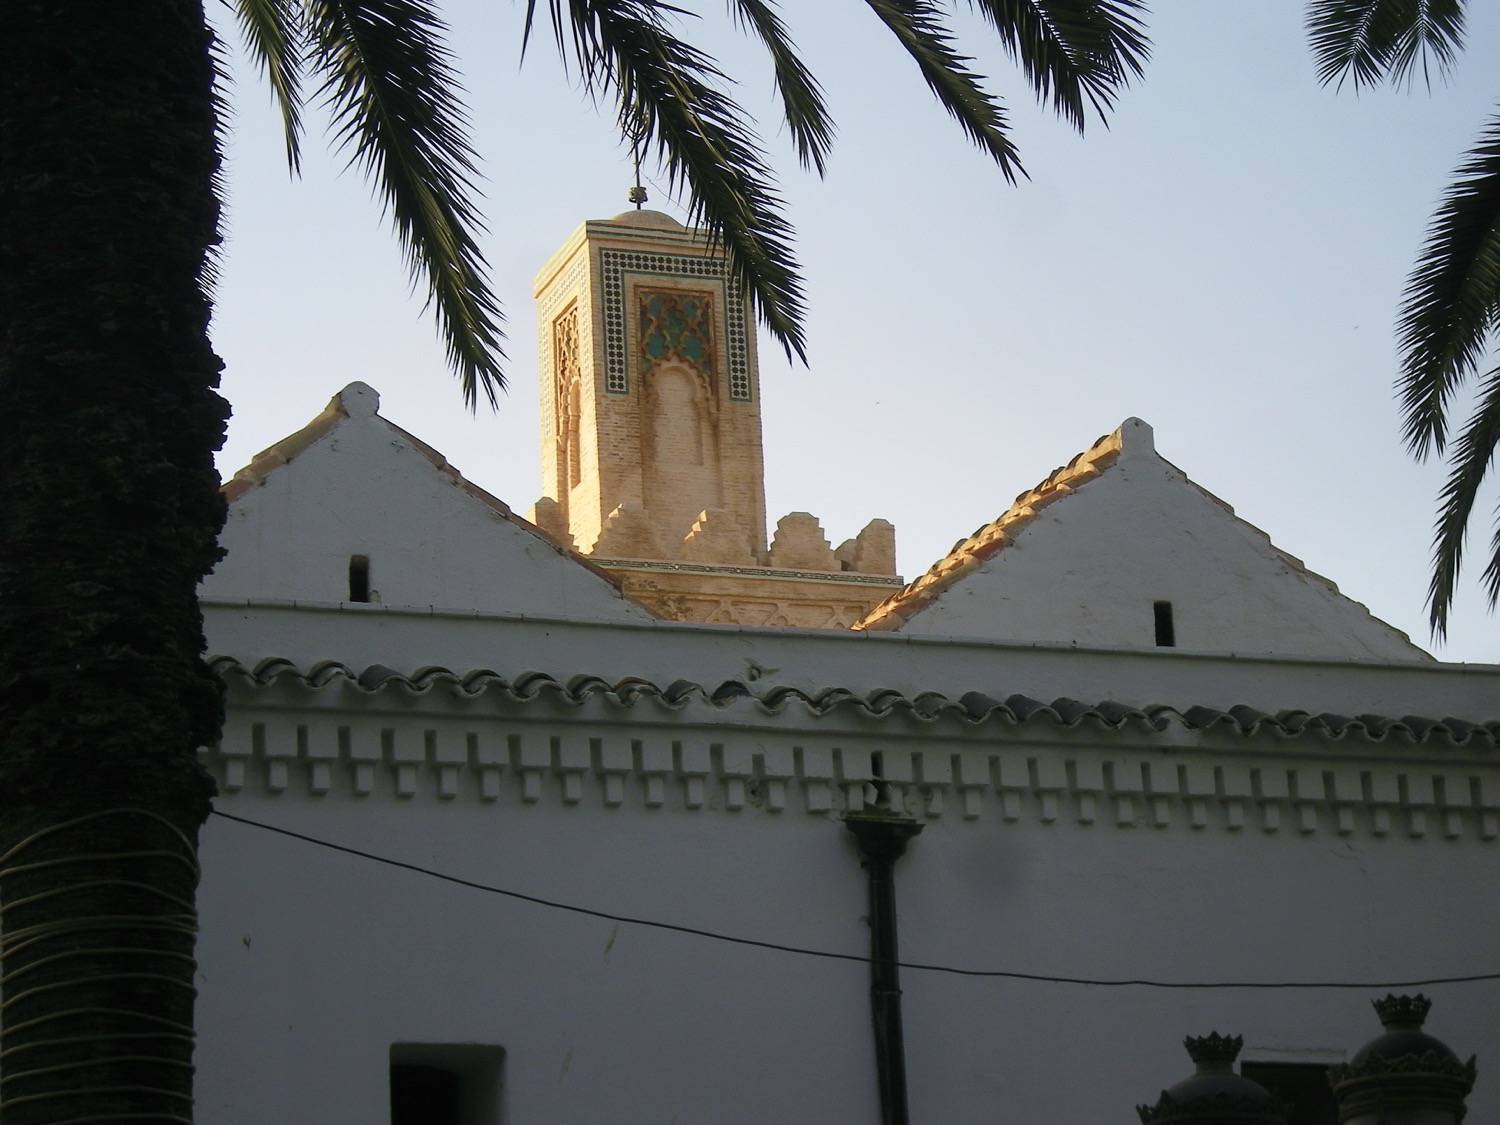 Exterior view toward the minaret